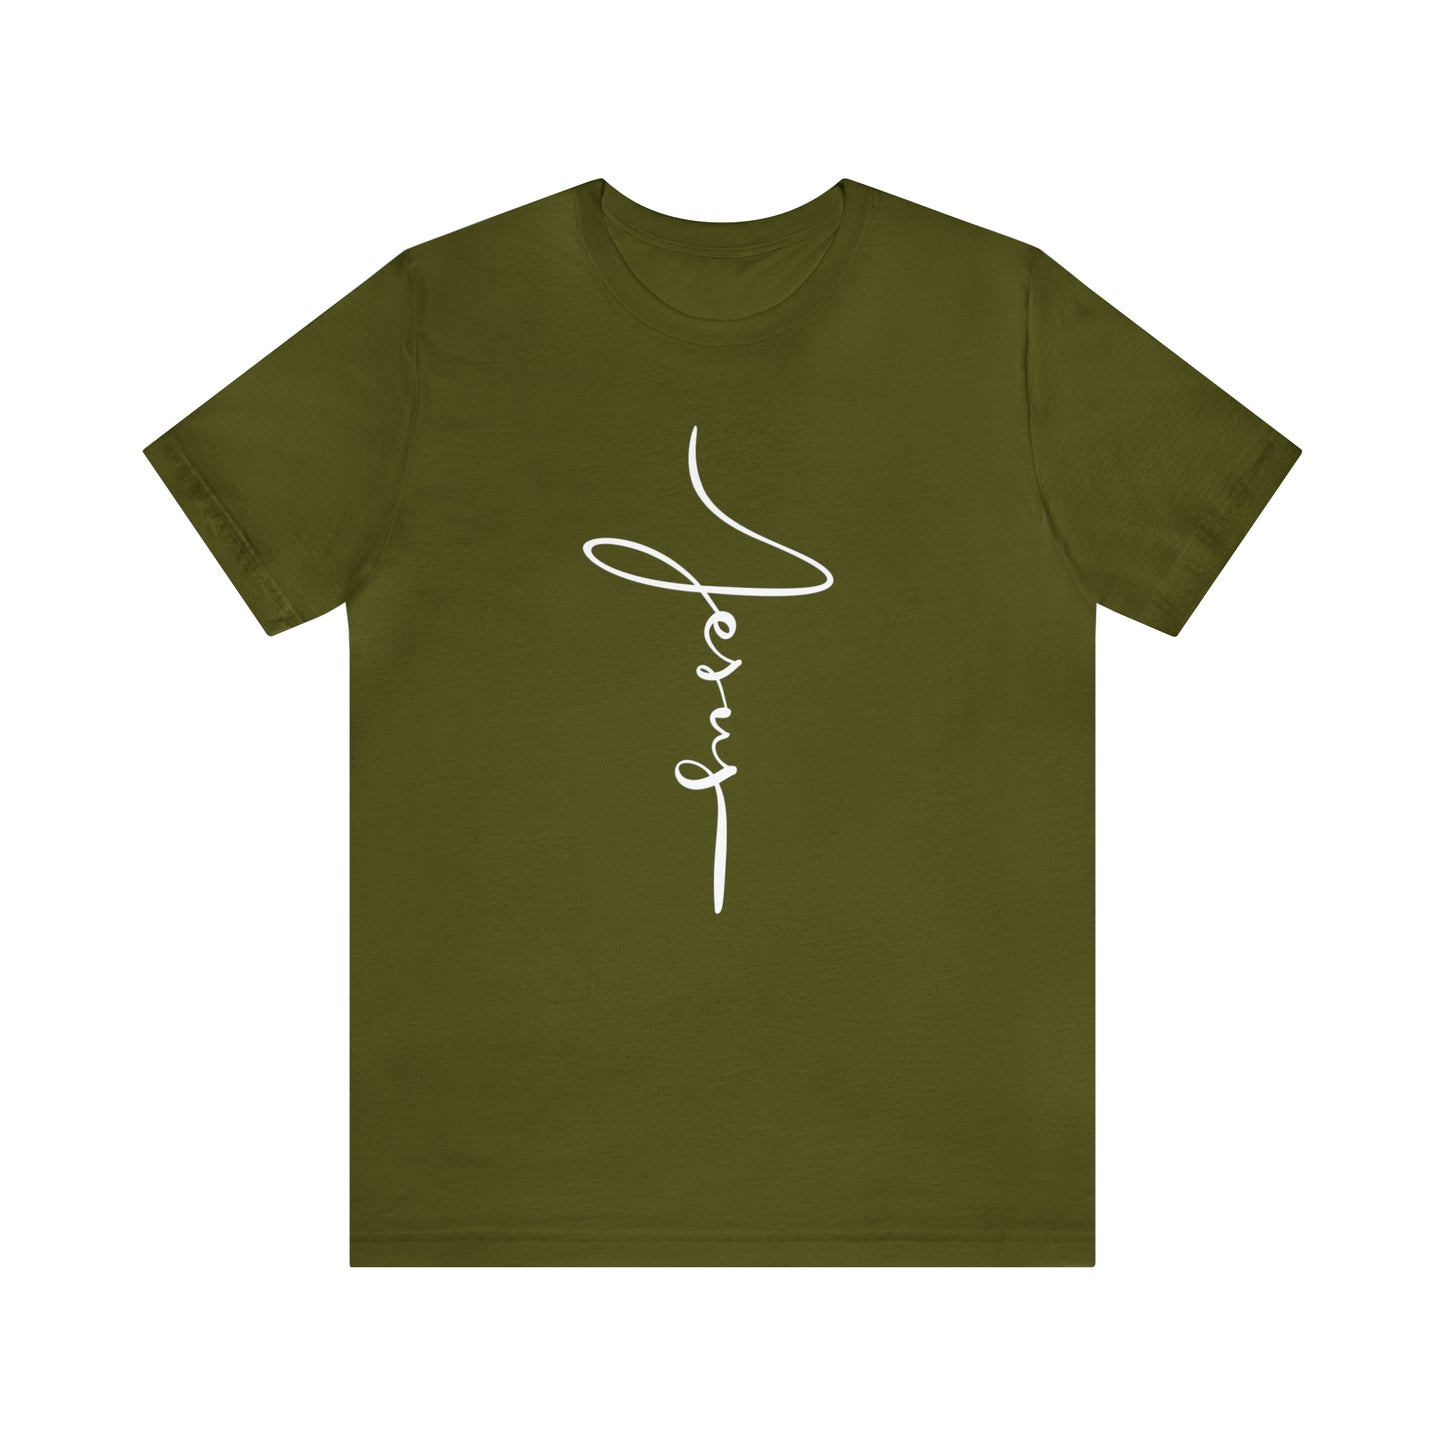 Jesus Cross Christian T-Shirt - Cursive White Font Neutral Color Tees Olive mockup